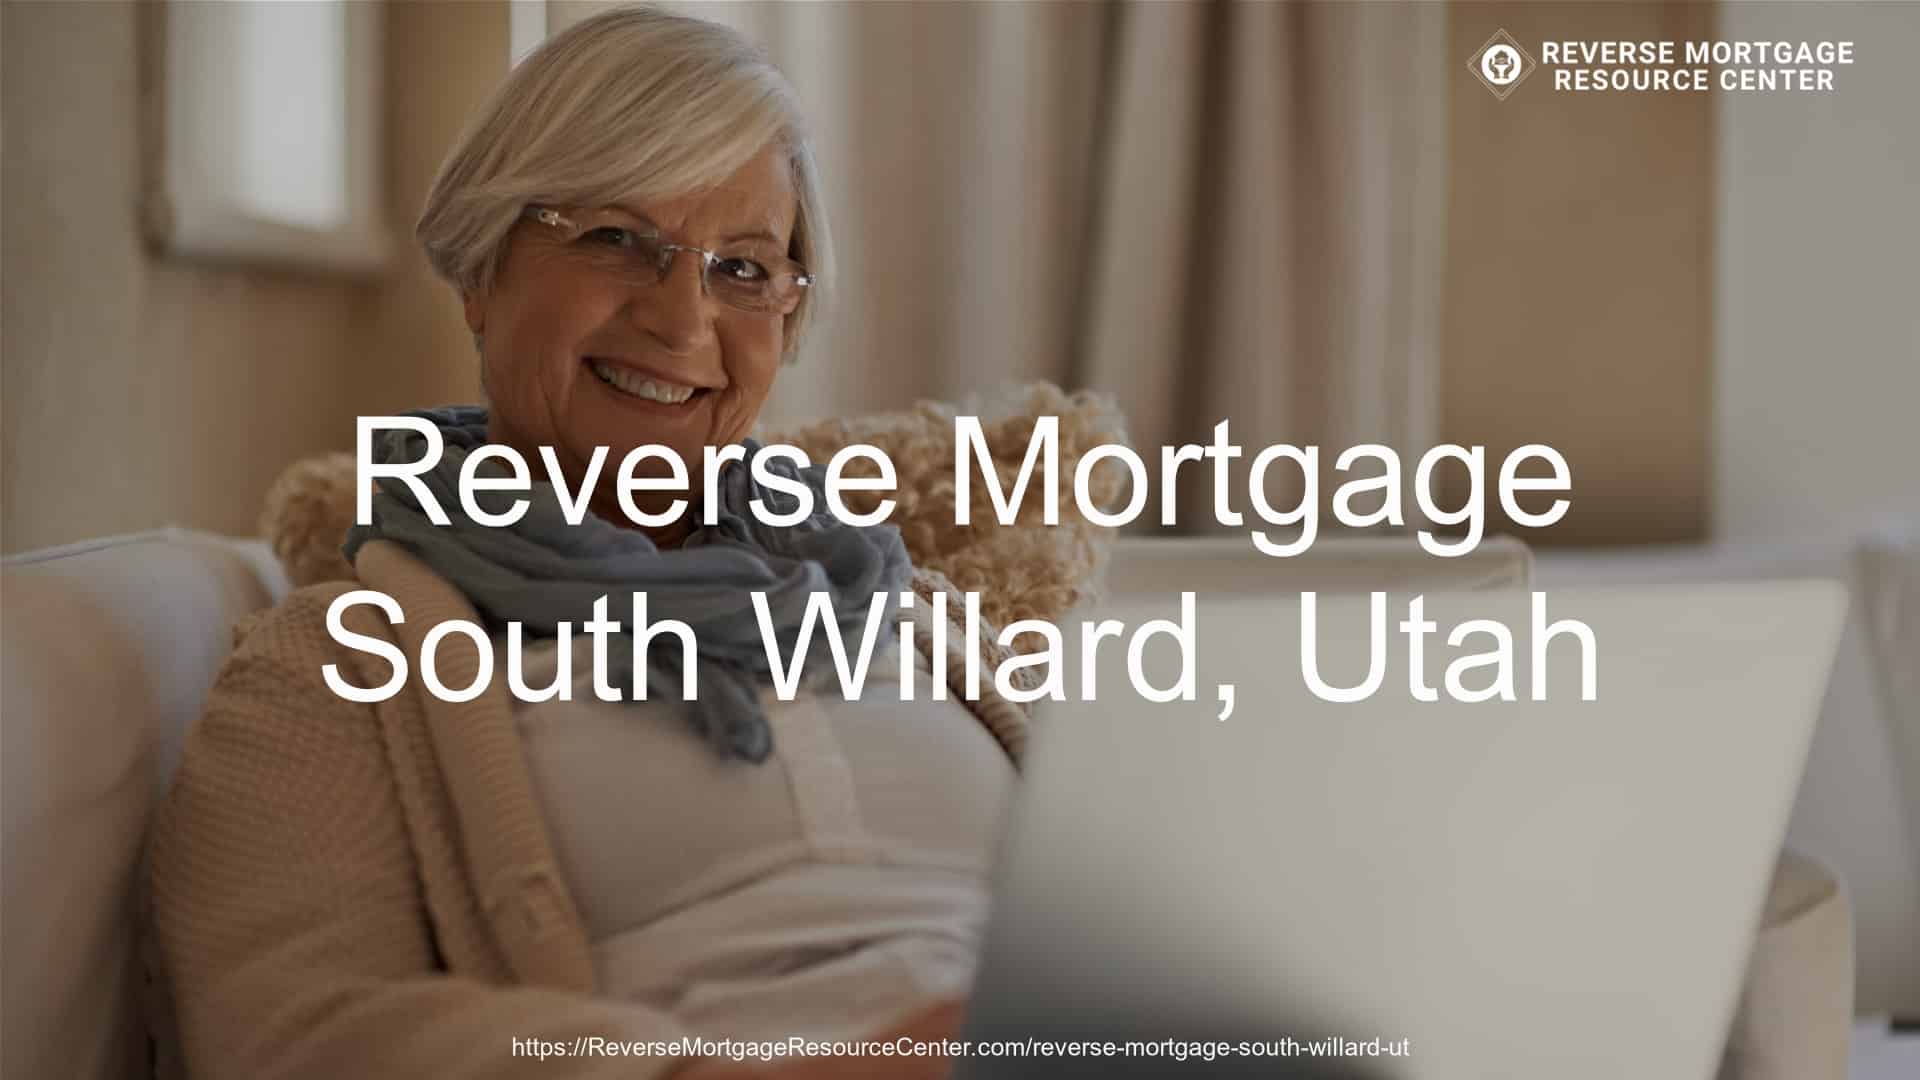 Reverse Mortgage Loans in South Willard Utah